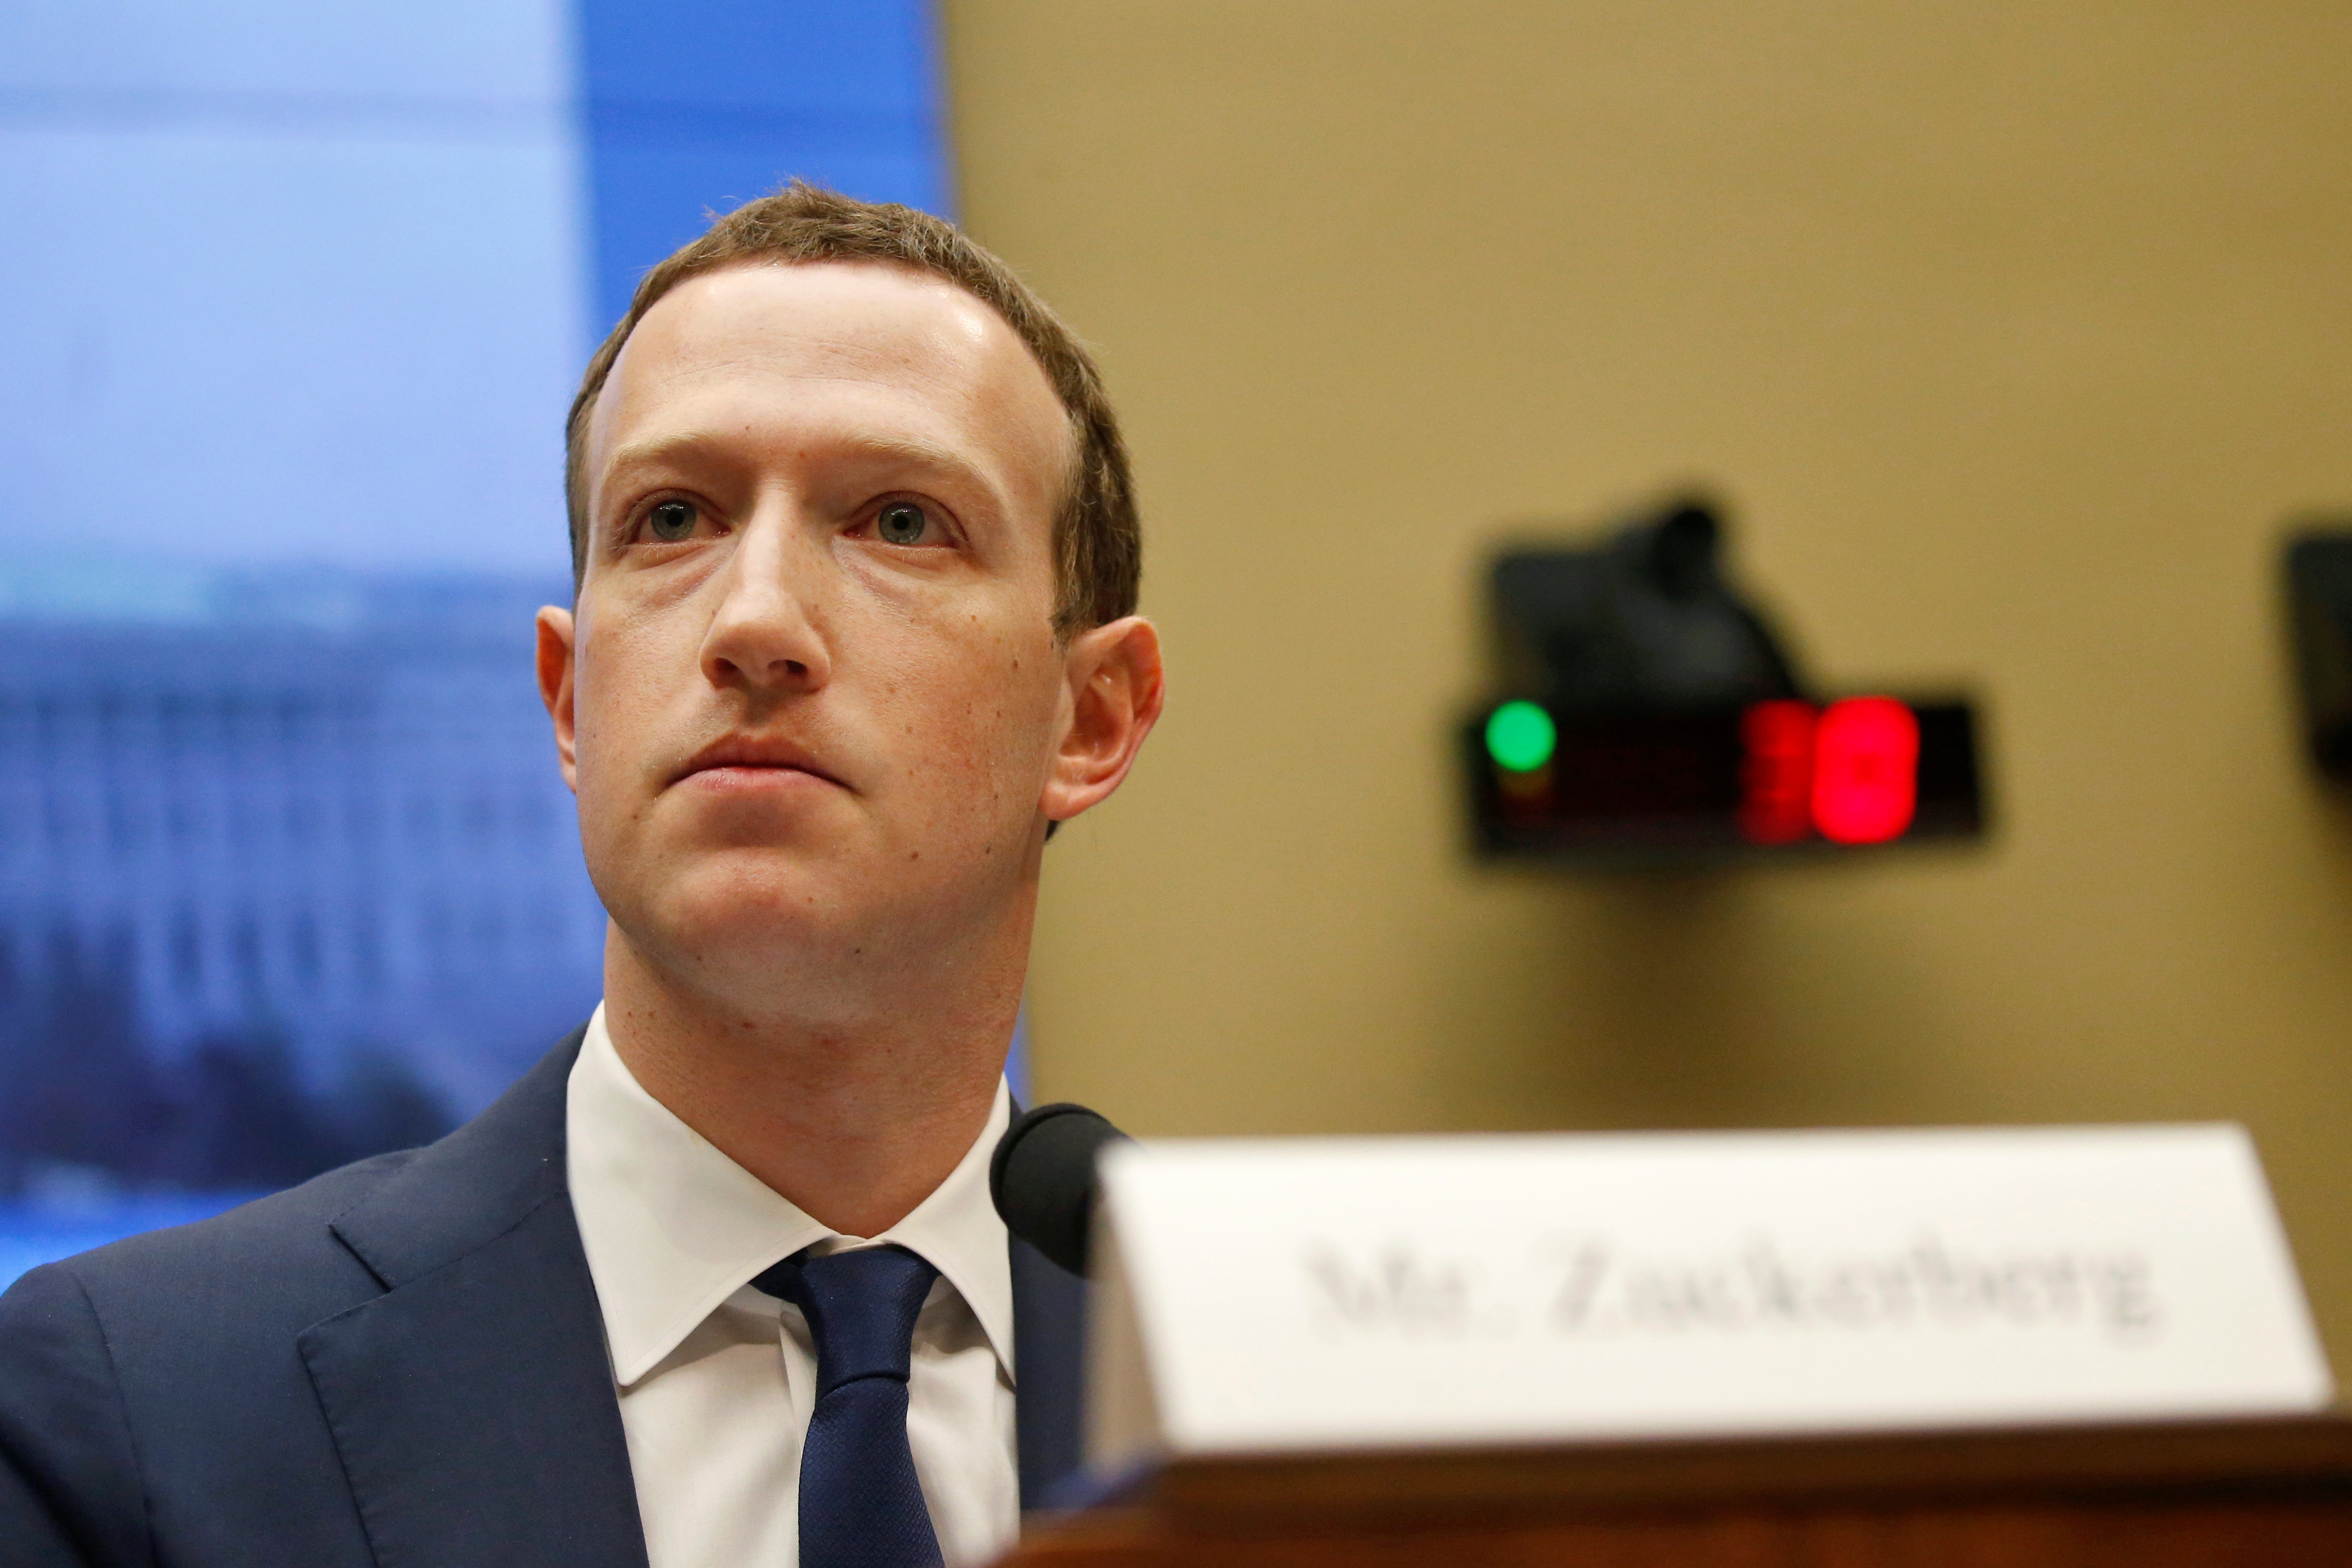 Mark Zuckerberg appears behind a nameplate as he testifies in Congress.